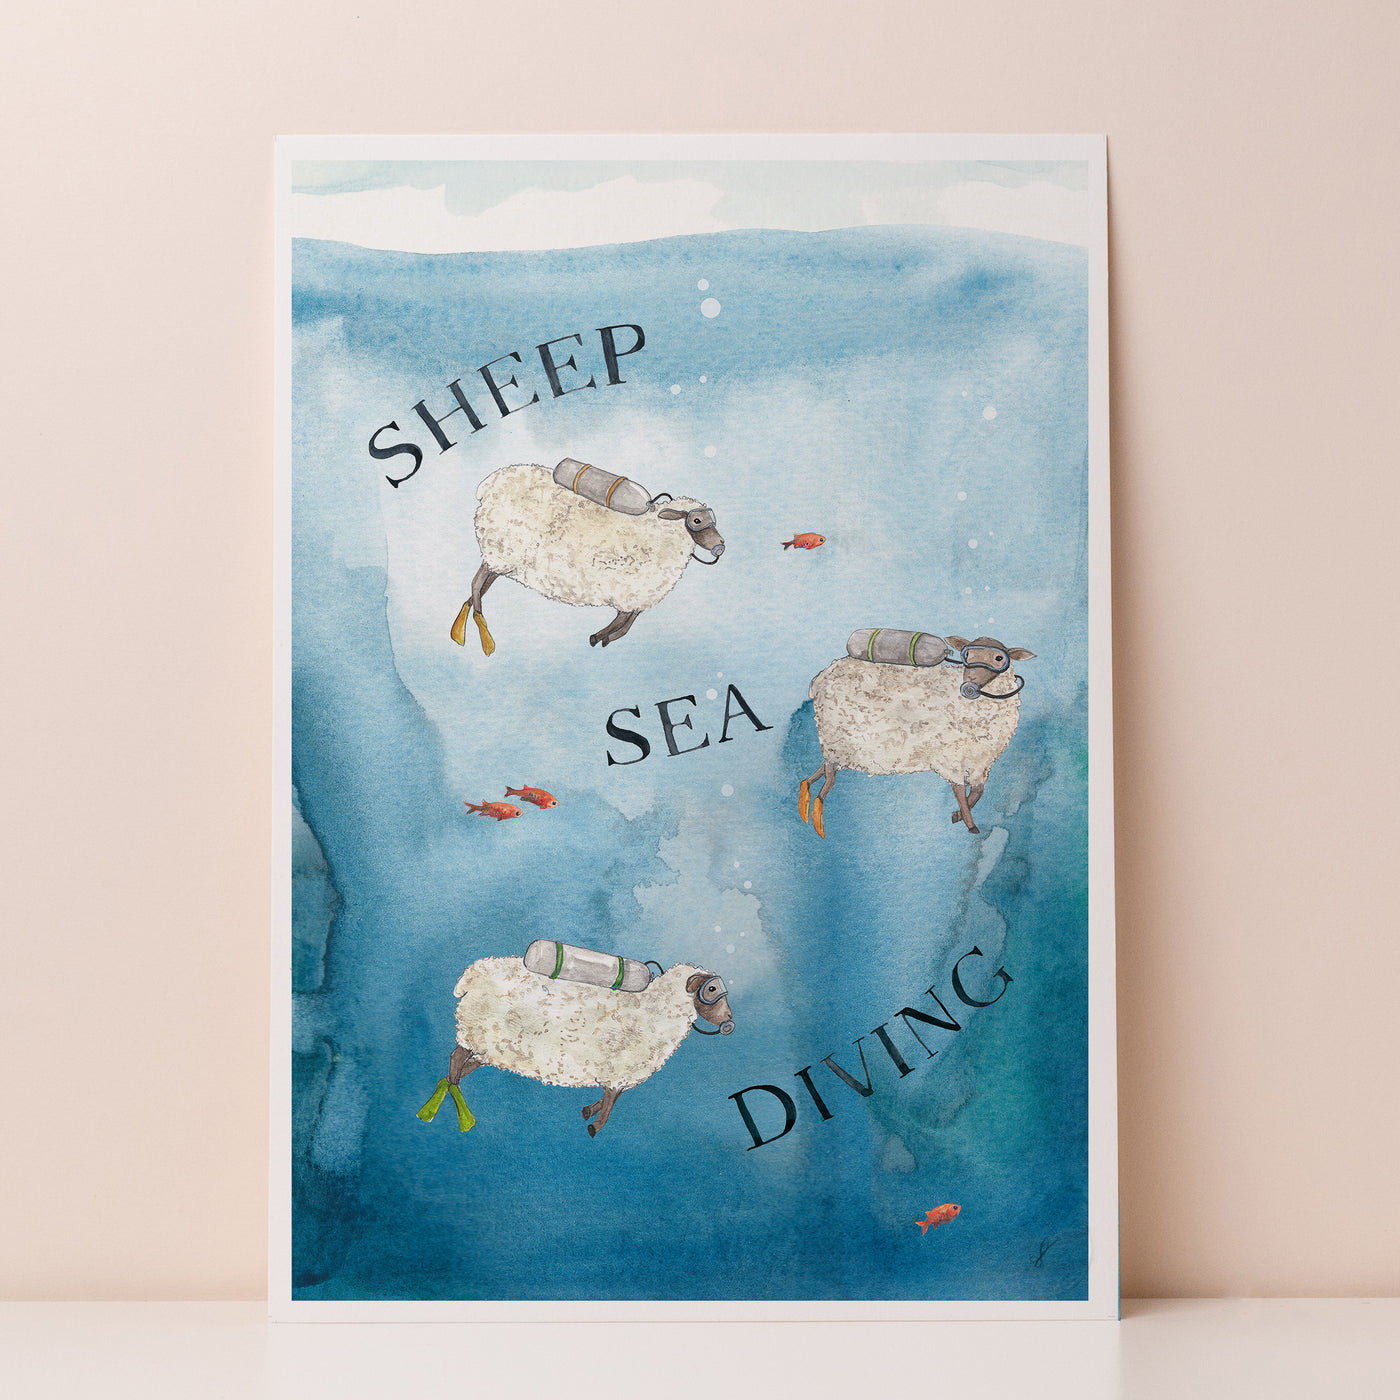 Sheep Sea Diving Print